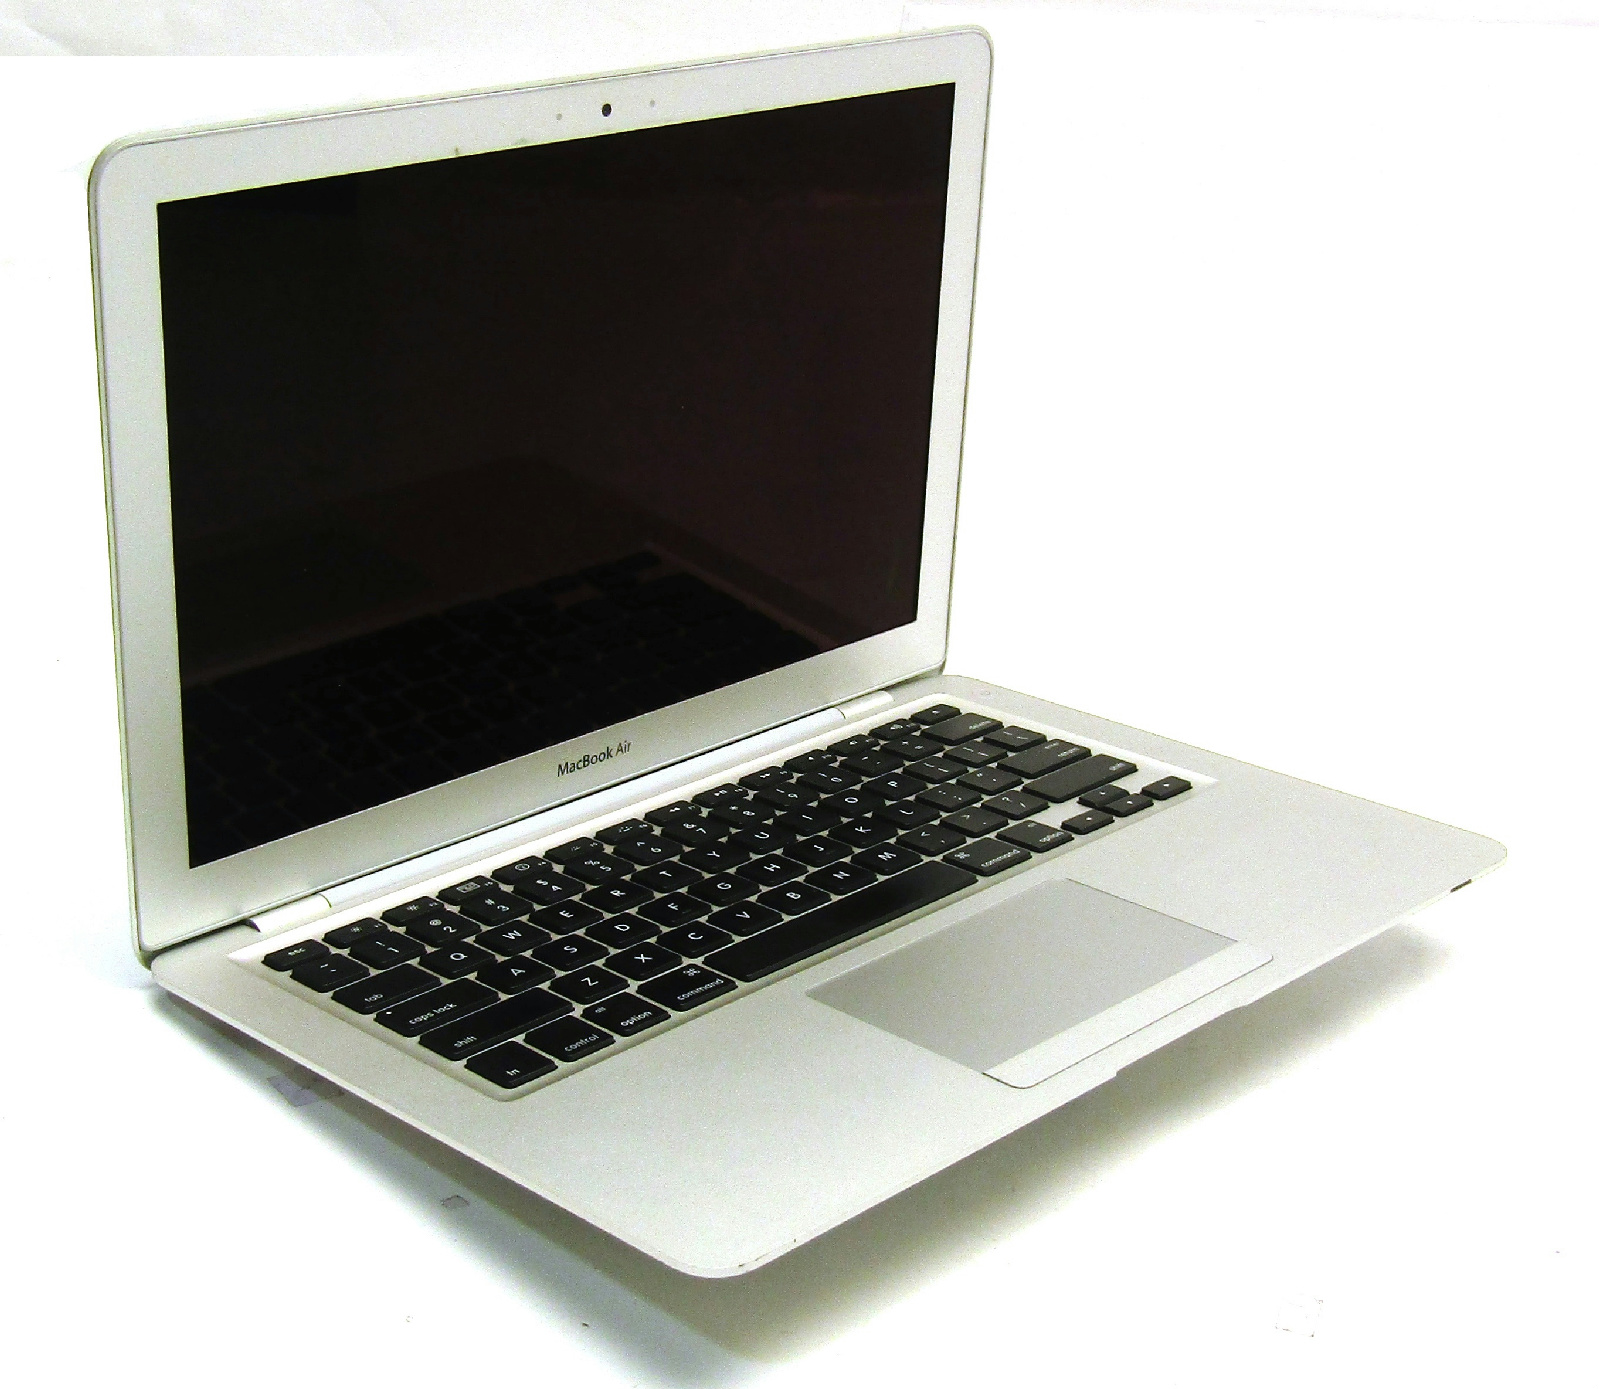 Apple MacBook Air A1304 (MID-2009) 13" Laptop | 2.13GHz C2DUO SL9600